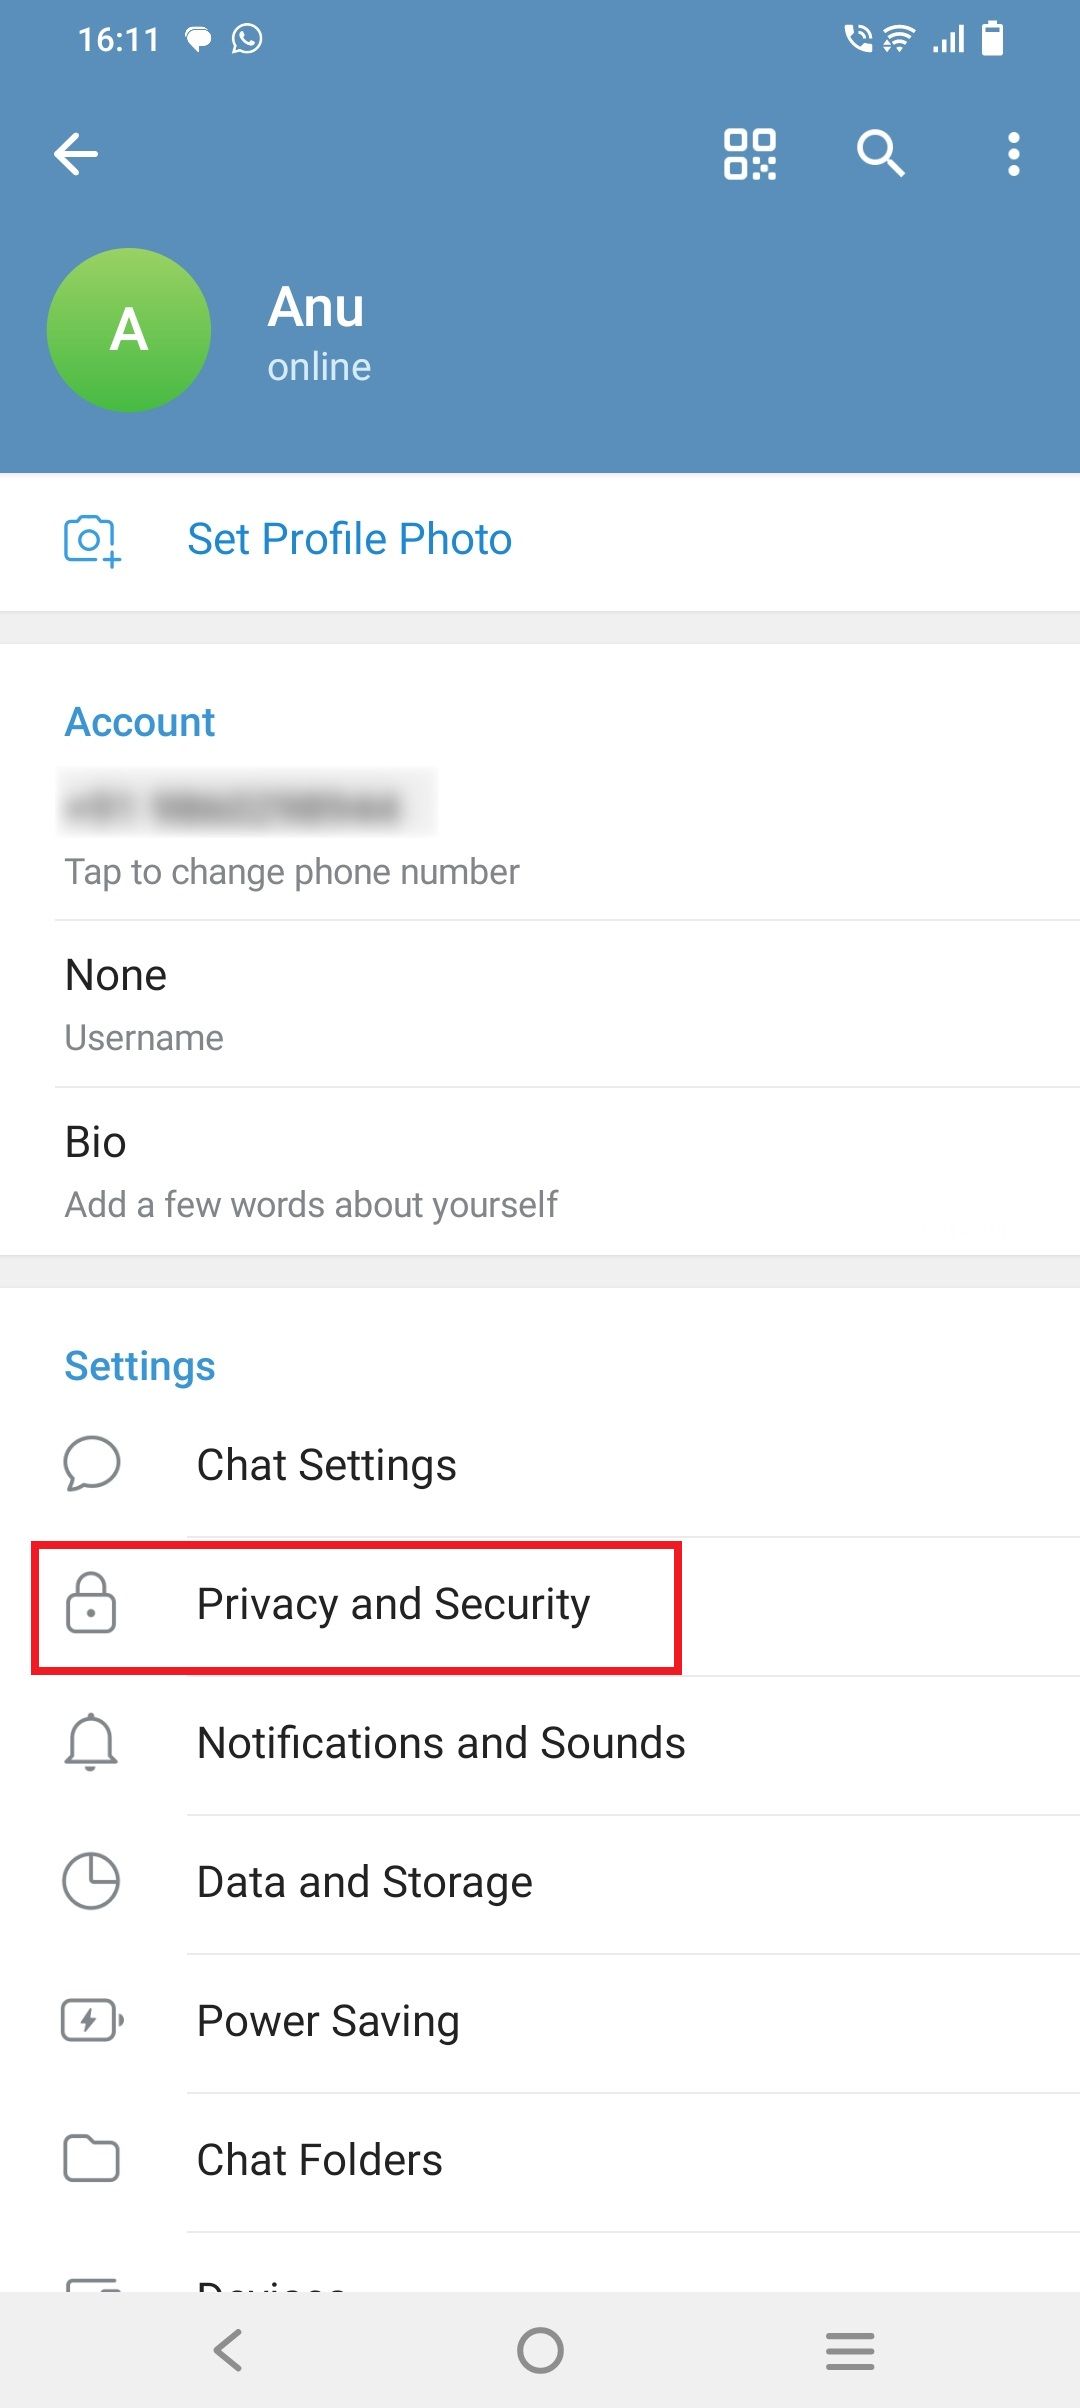 Screenshot of Telegram's Settings menu, highlighting Privacy and Security option.